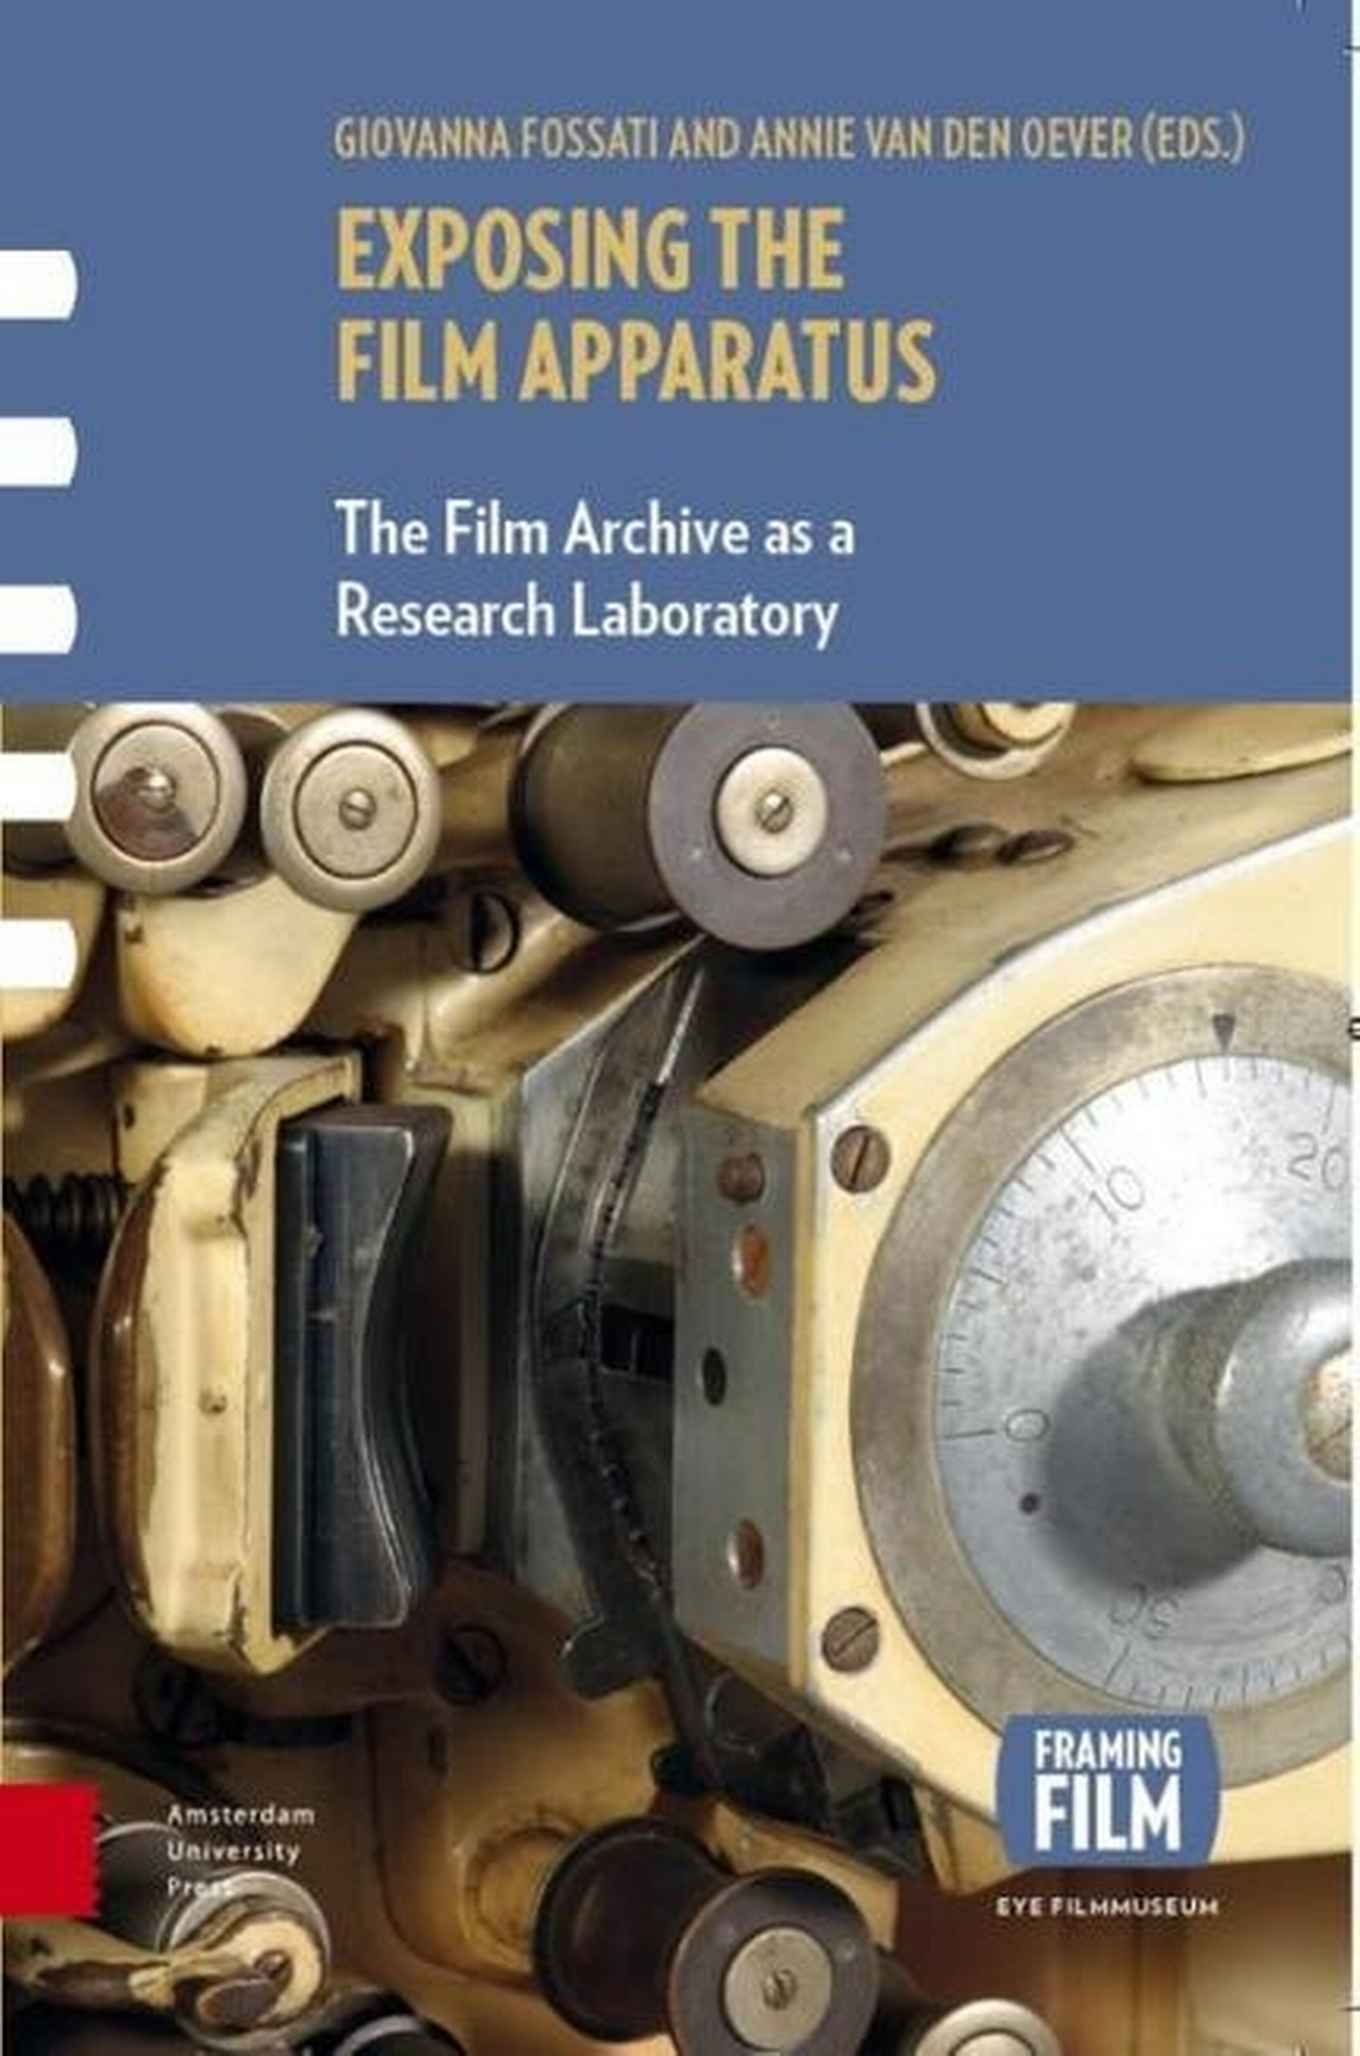 Exposing the Film Apparatus | Giovanna Fossati and Annie van den Oever